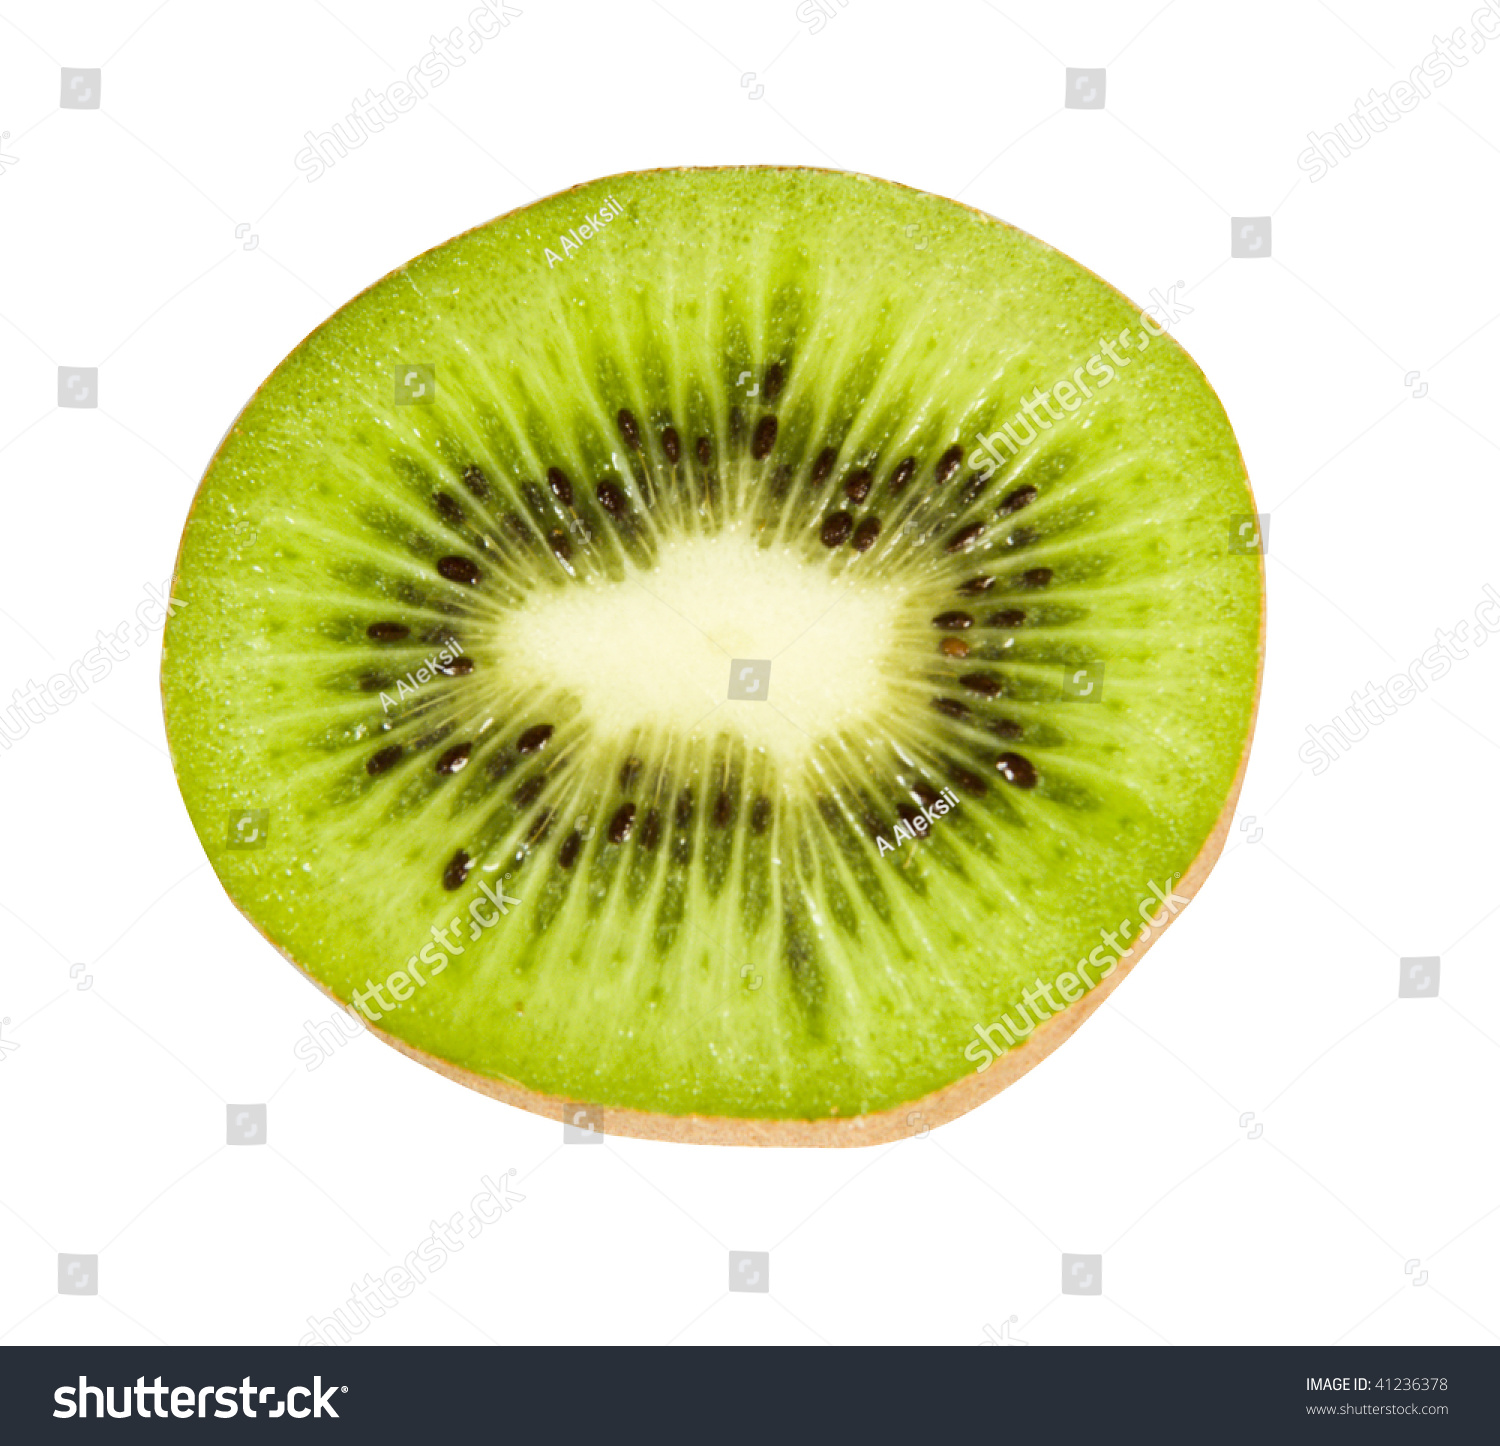 Sliced Open Kiwi On White Background Stock Photo (Royalty Free ...